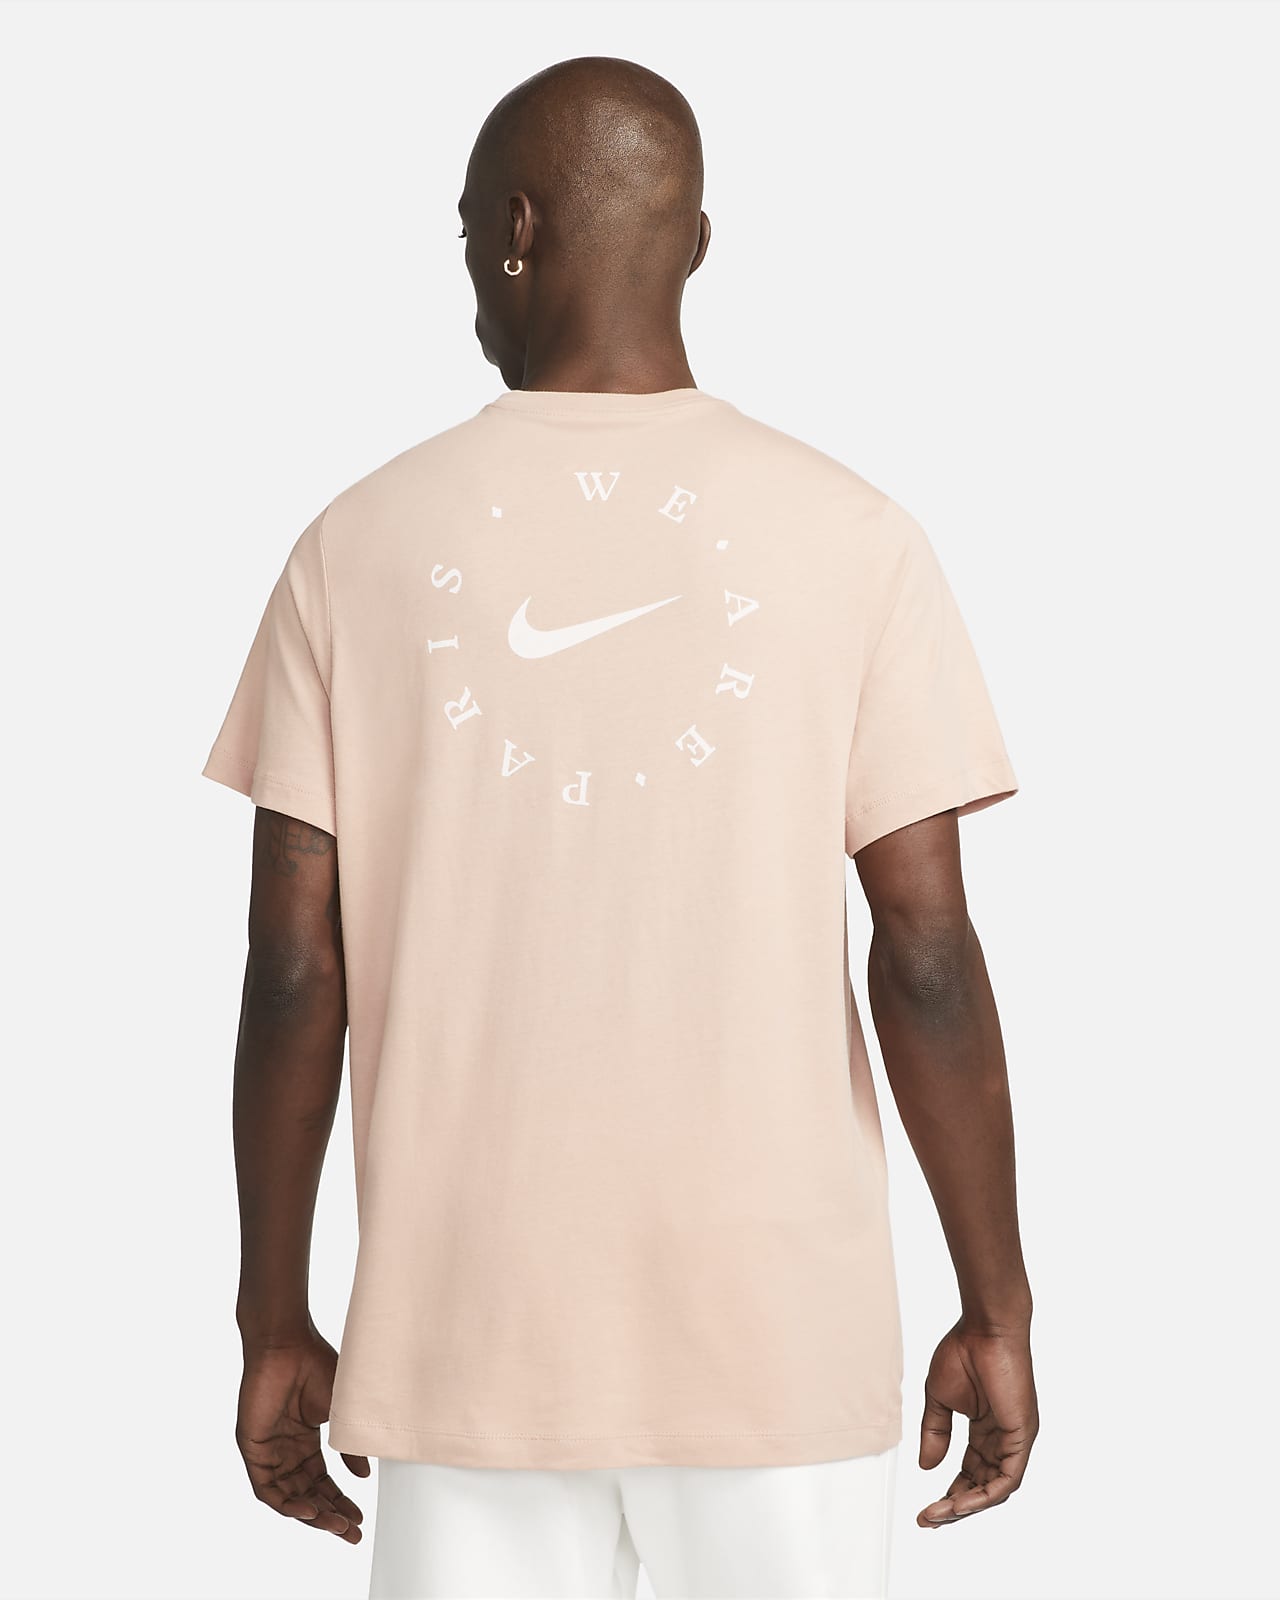 Saint-Germain Men's Soccer T-Shirt. Nike.com